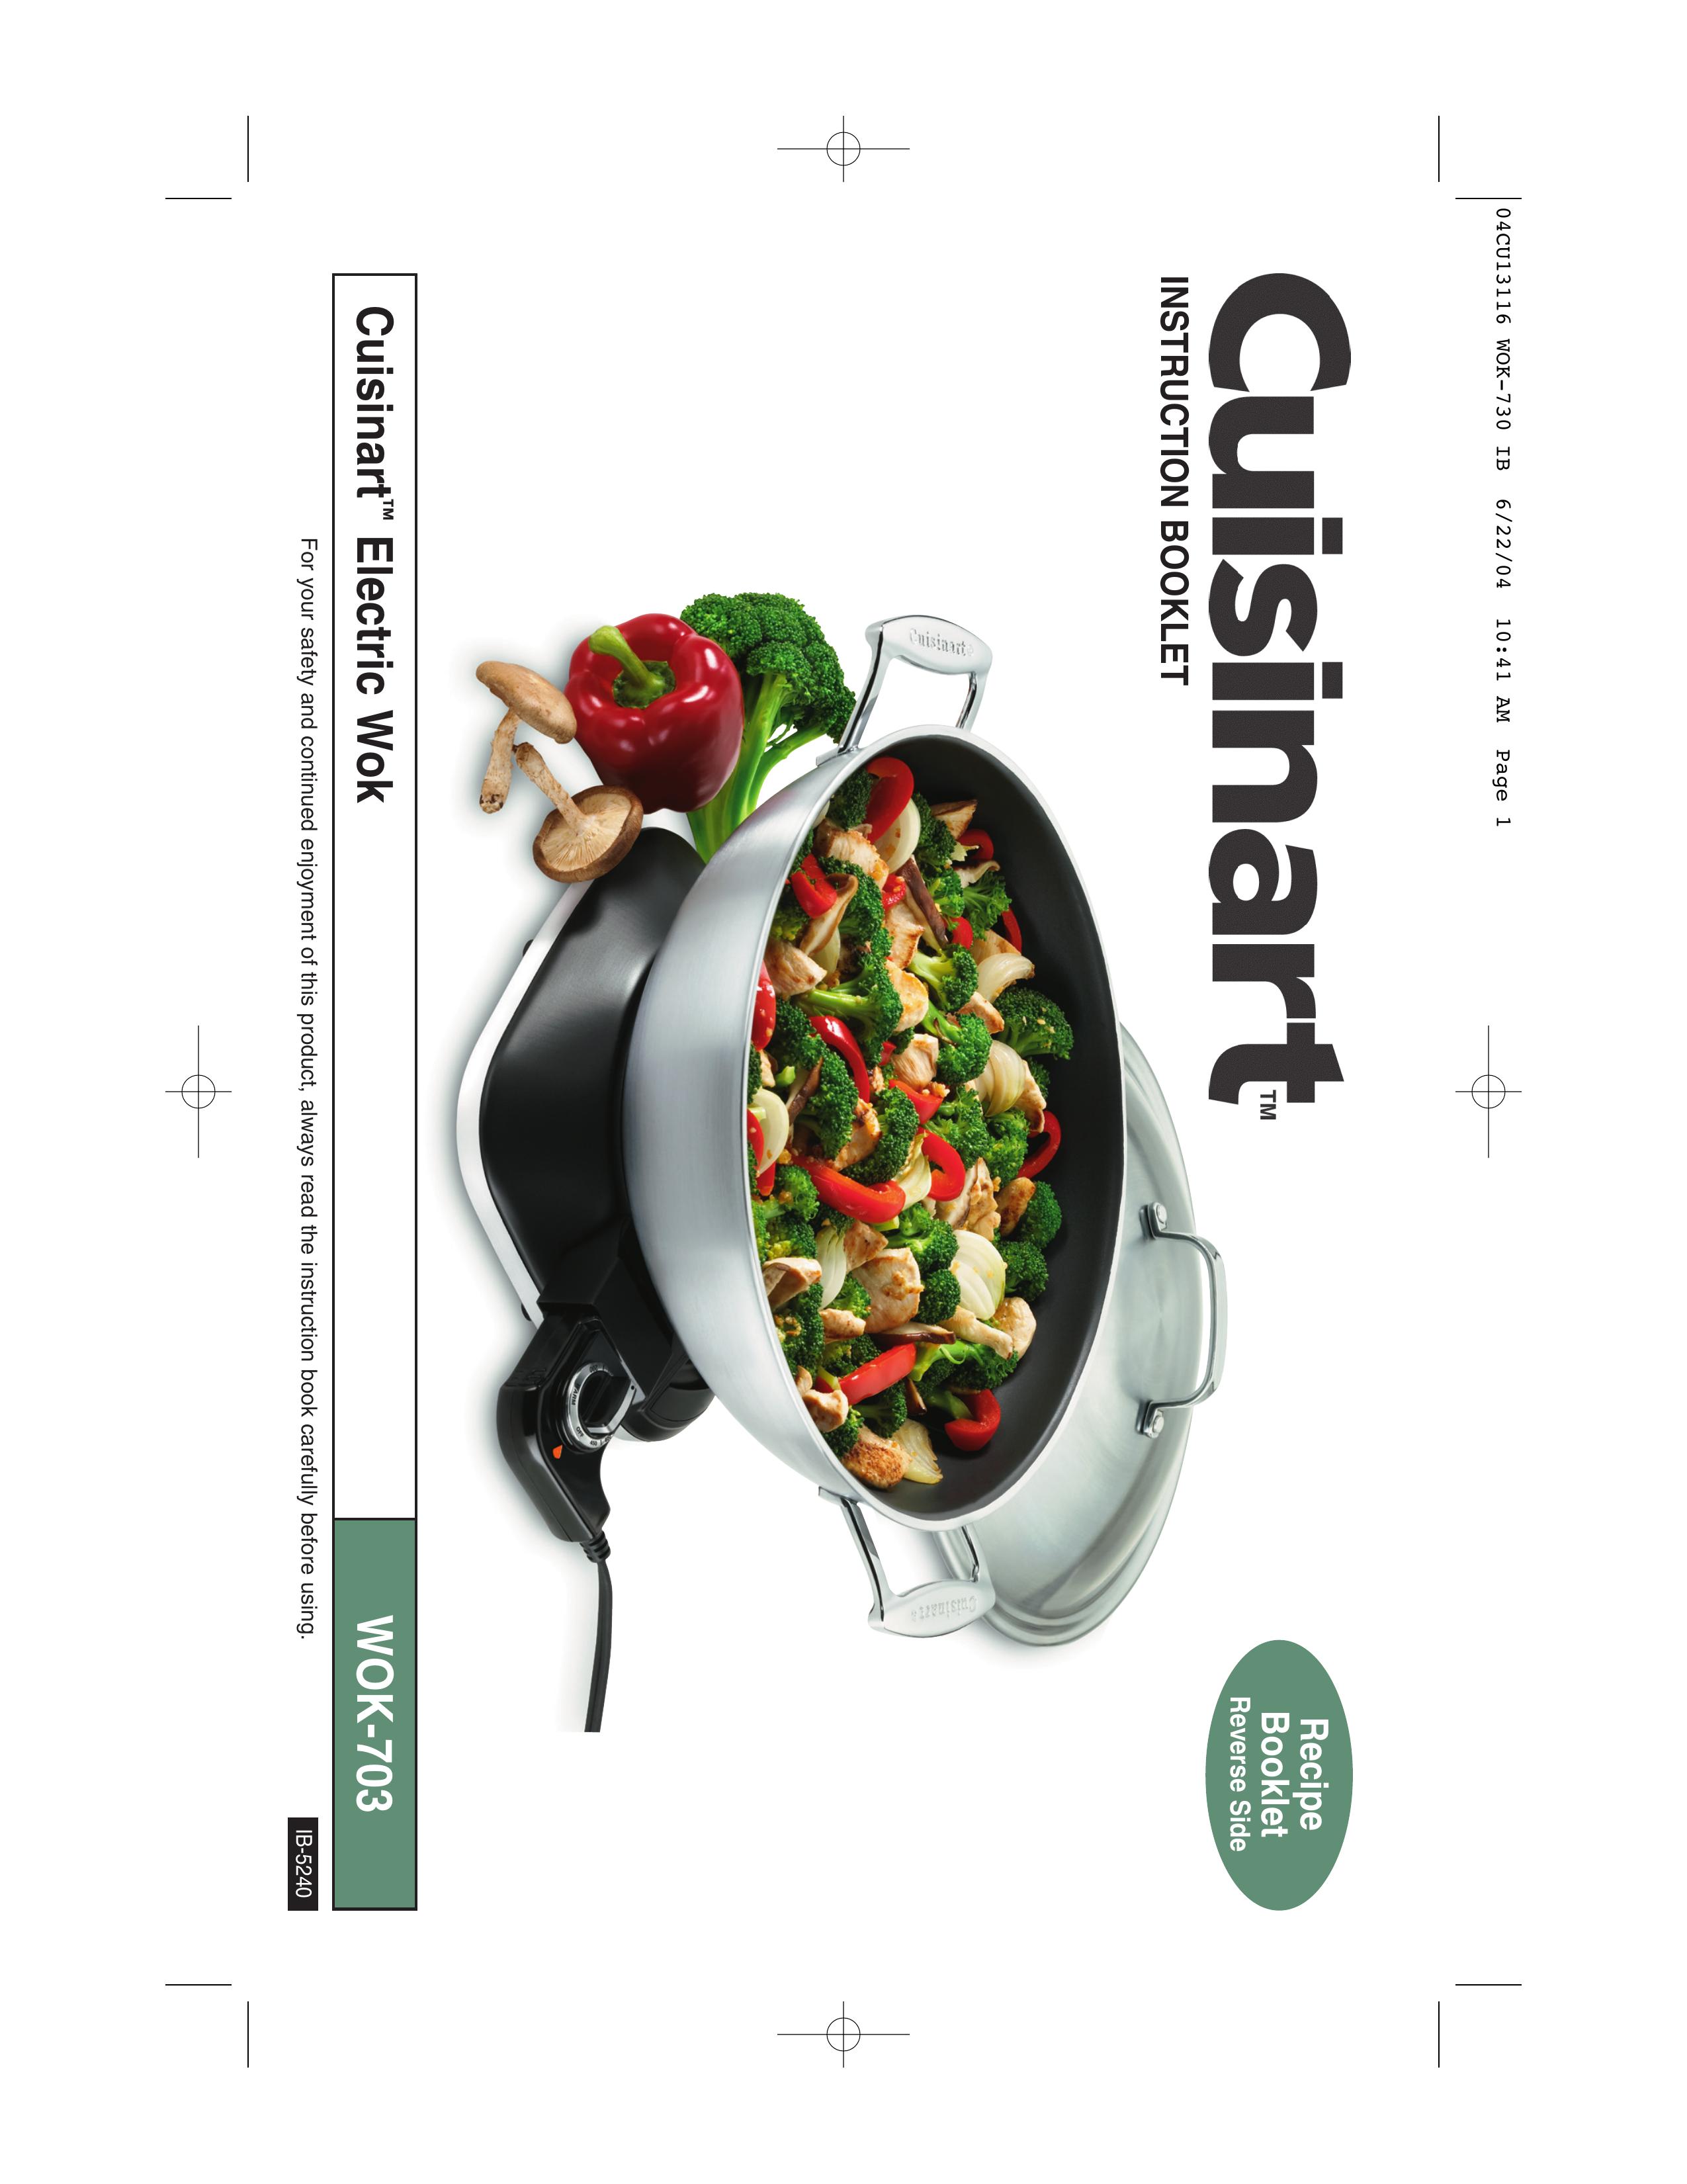 Cuisinart WOK-730 Wok User Manual